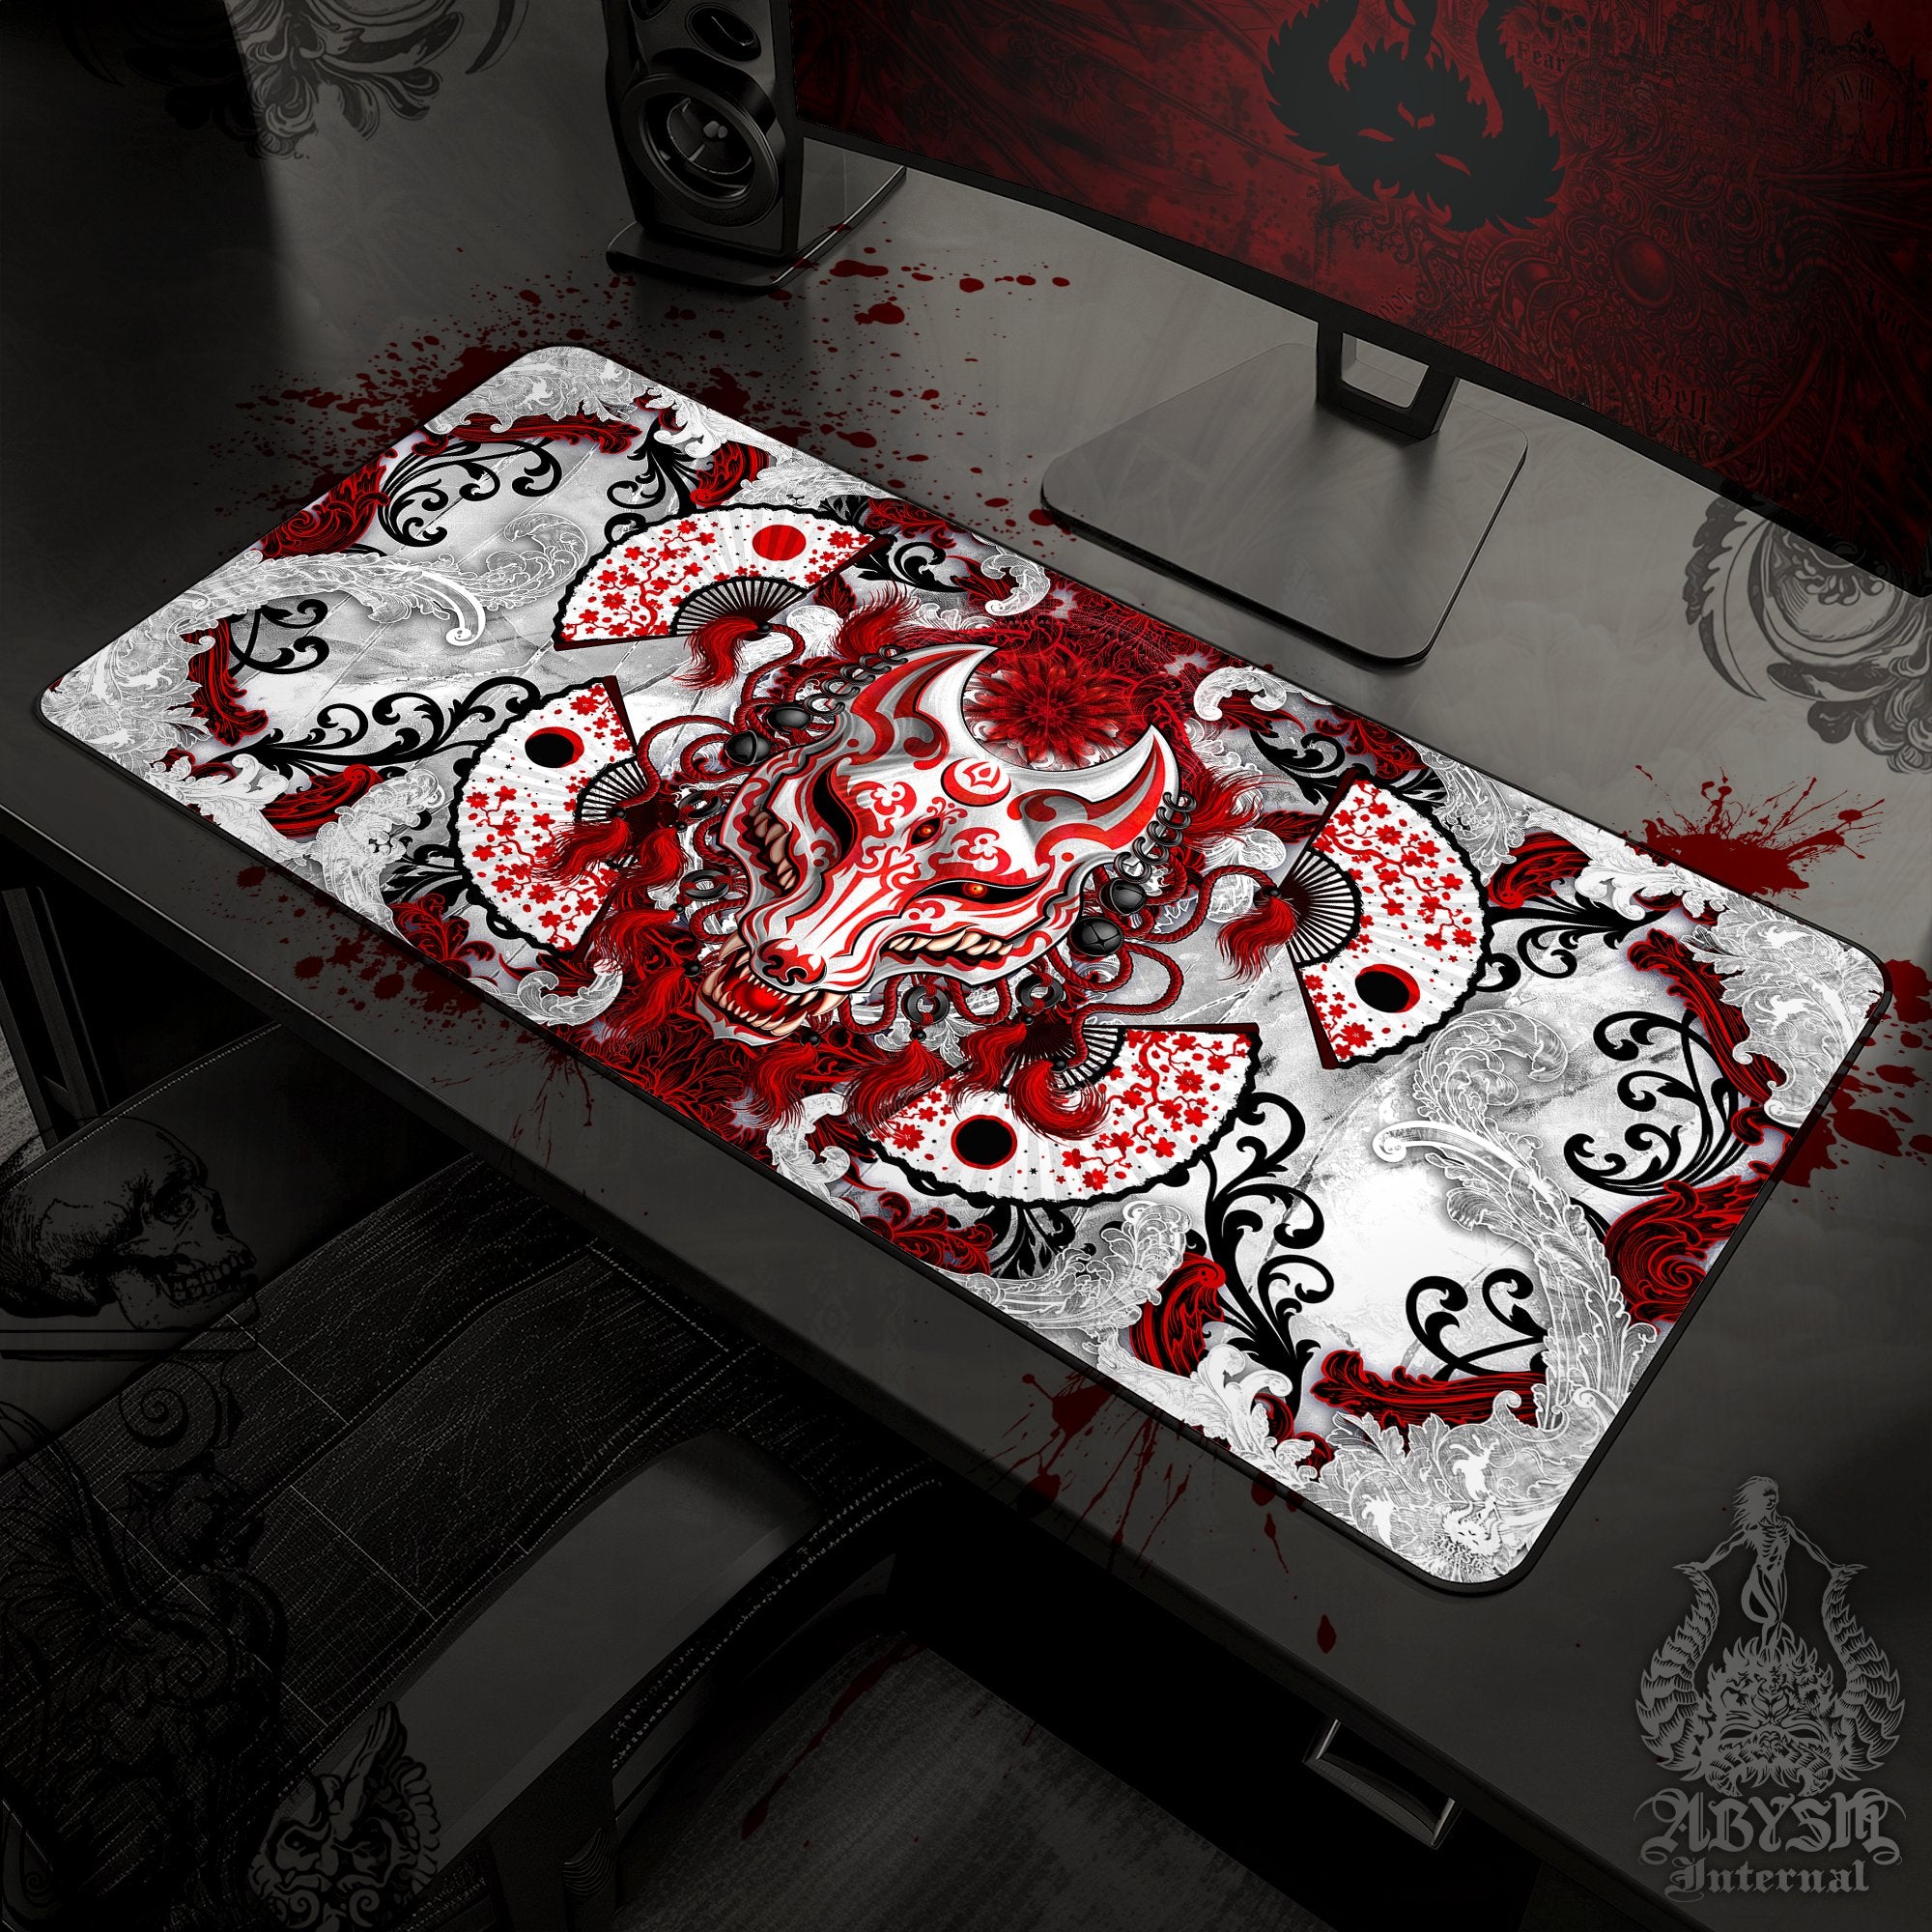 Kitsune Gaming Desk Mat, Fox Mask Mouse Pad, Manga Wolf Table Protector Cover, Japanese Anime Okami Workpad, Youkai Art Print - Bloody White Goth - Abysm Internal